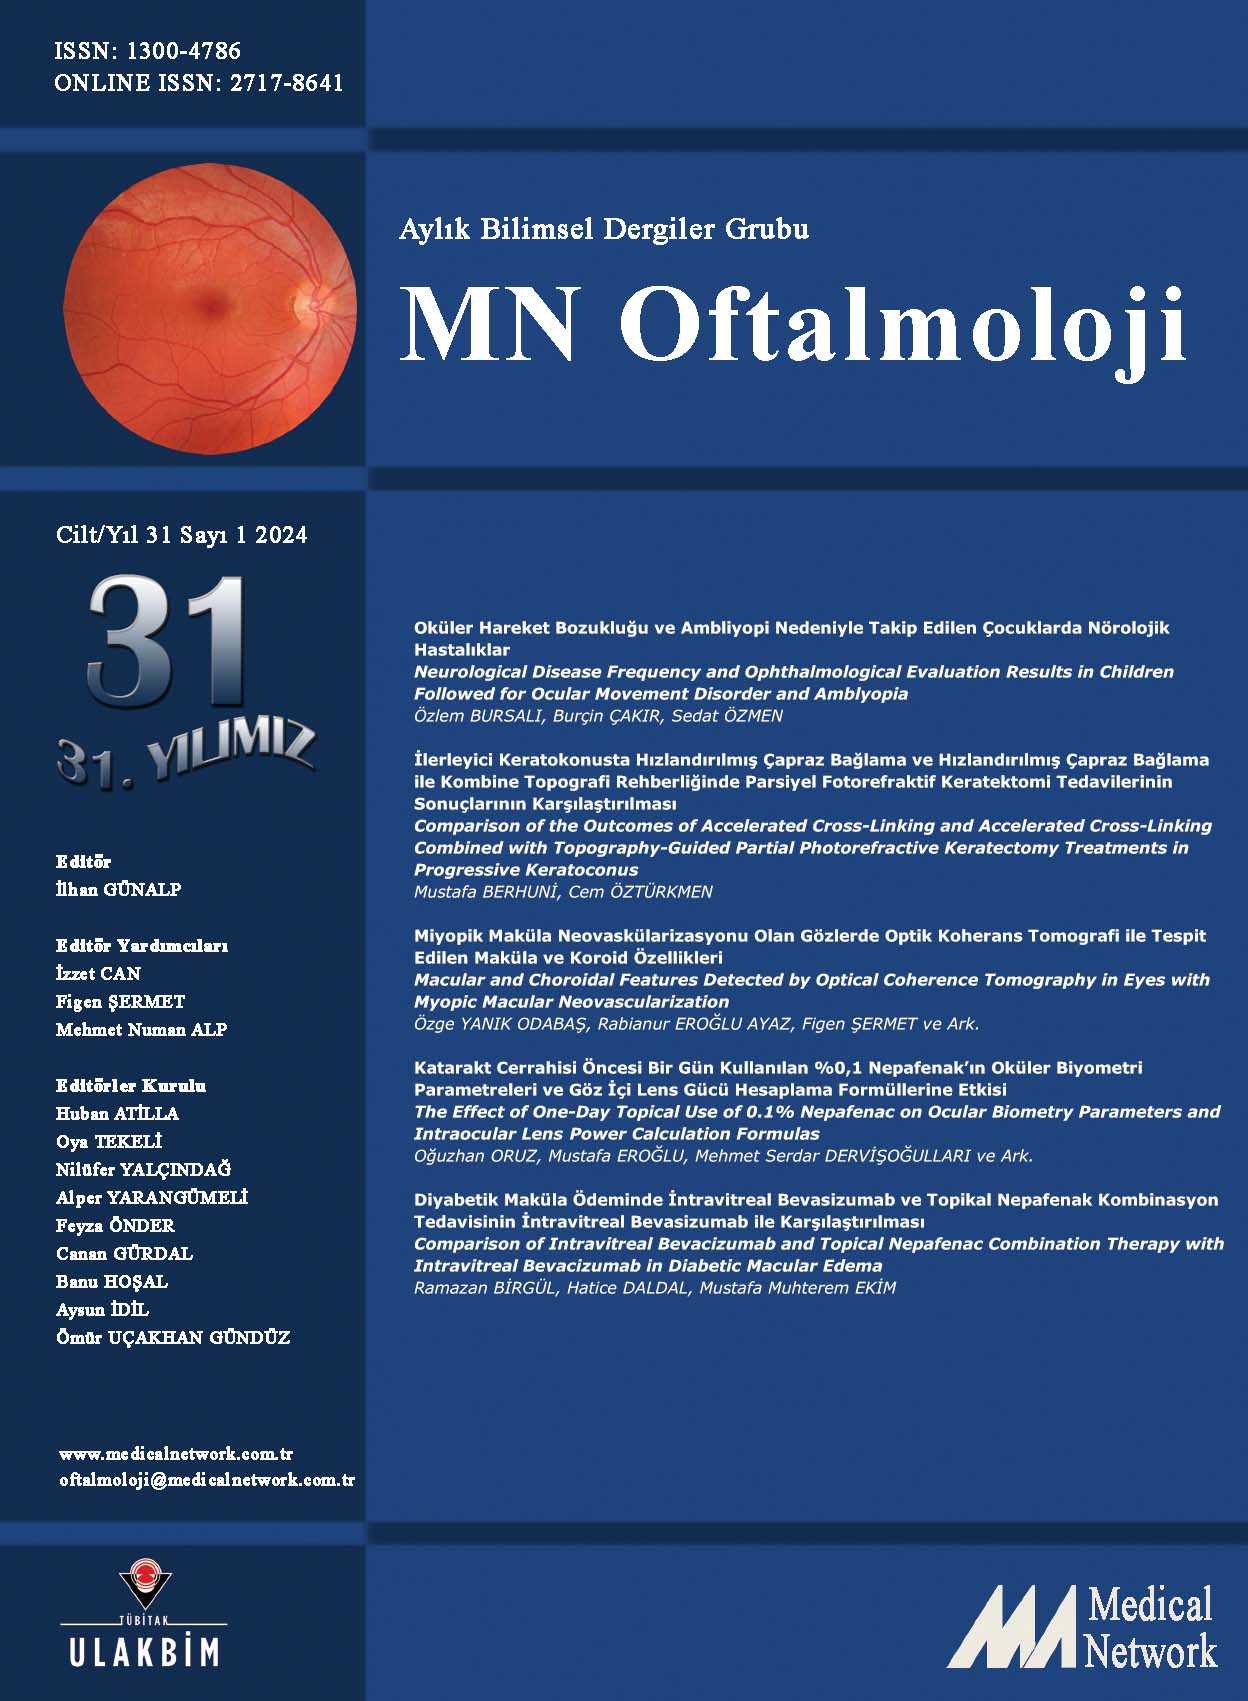 <p>MN Oftalmoloji Cilt: 31 Say: 1 2024 (MN Ophthalmology Volume: 31 No: 1 2024)</p>